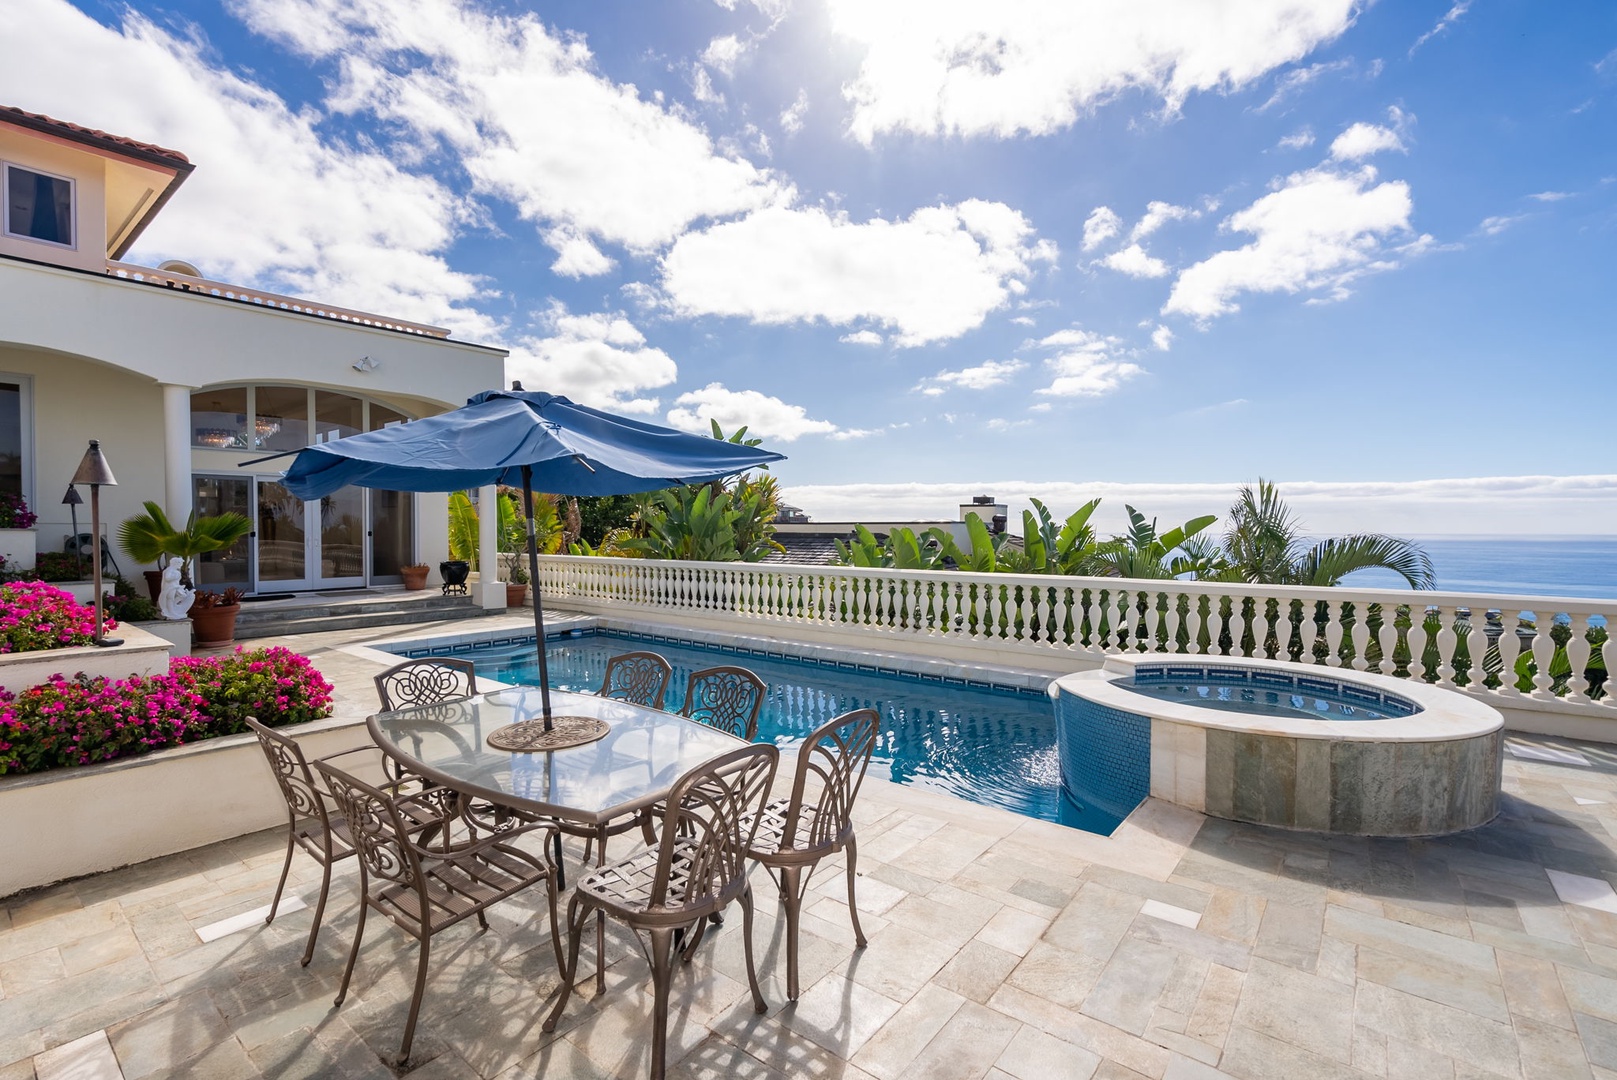 Honolulu Vacation Rentals, Hawaii Ridge Getaway - Poolside furnitures available.